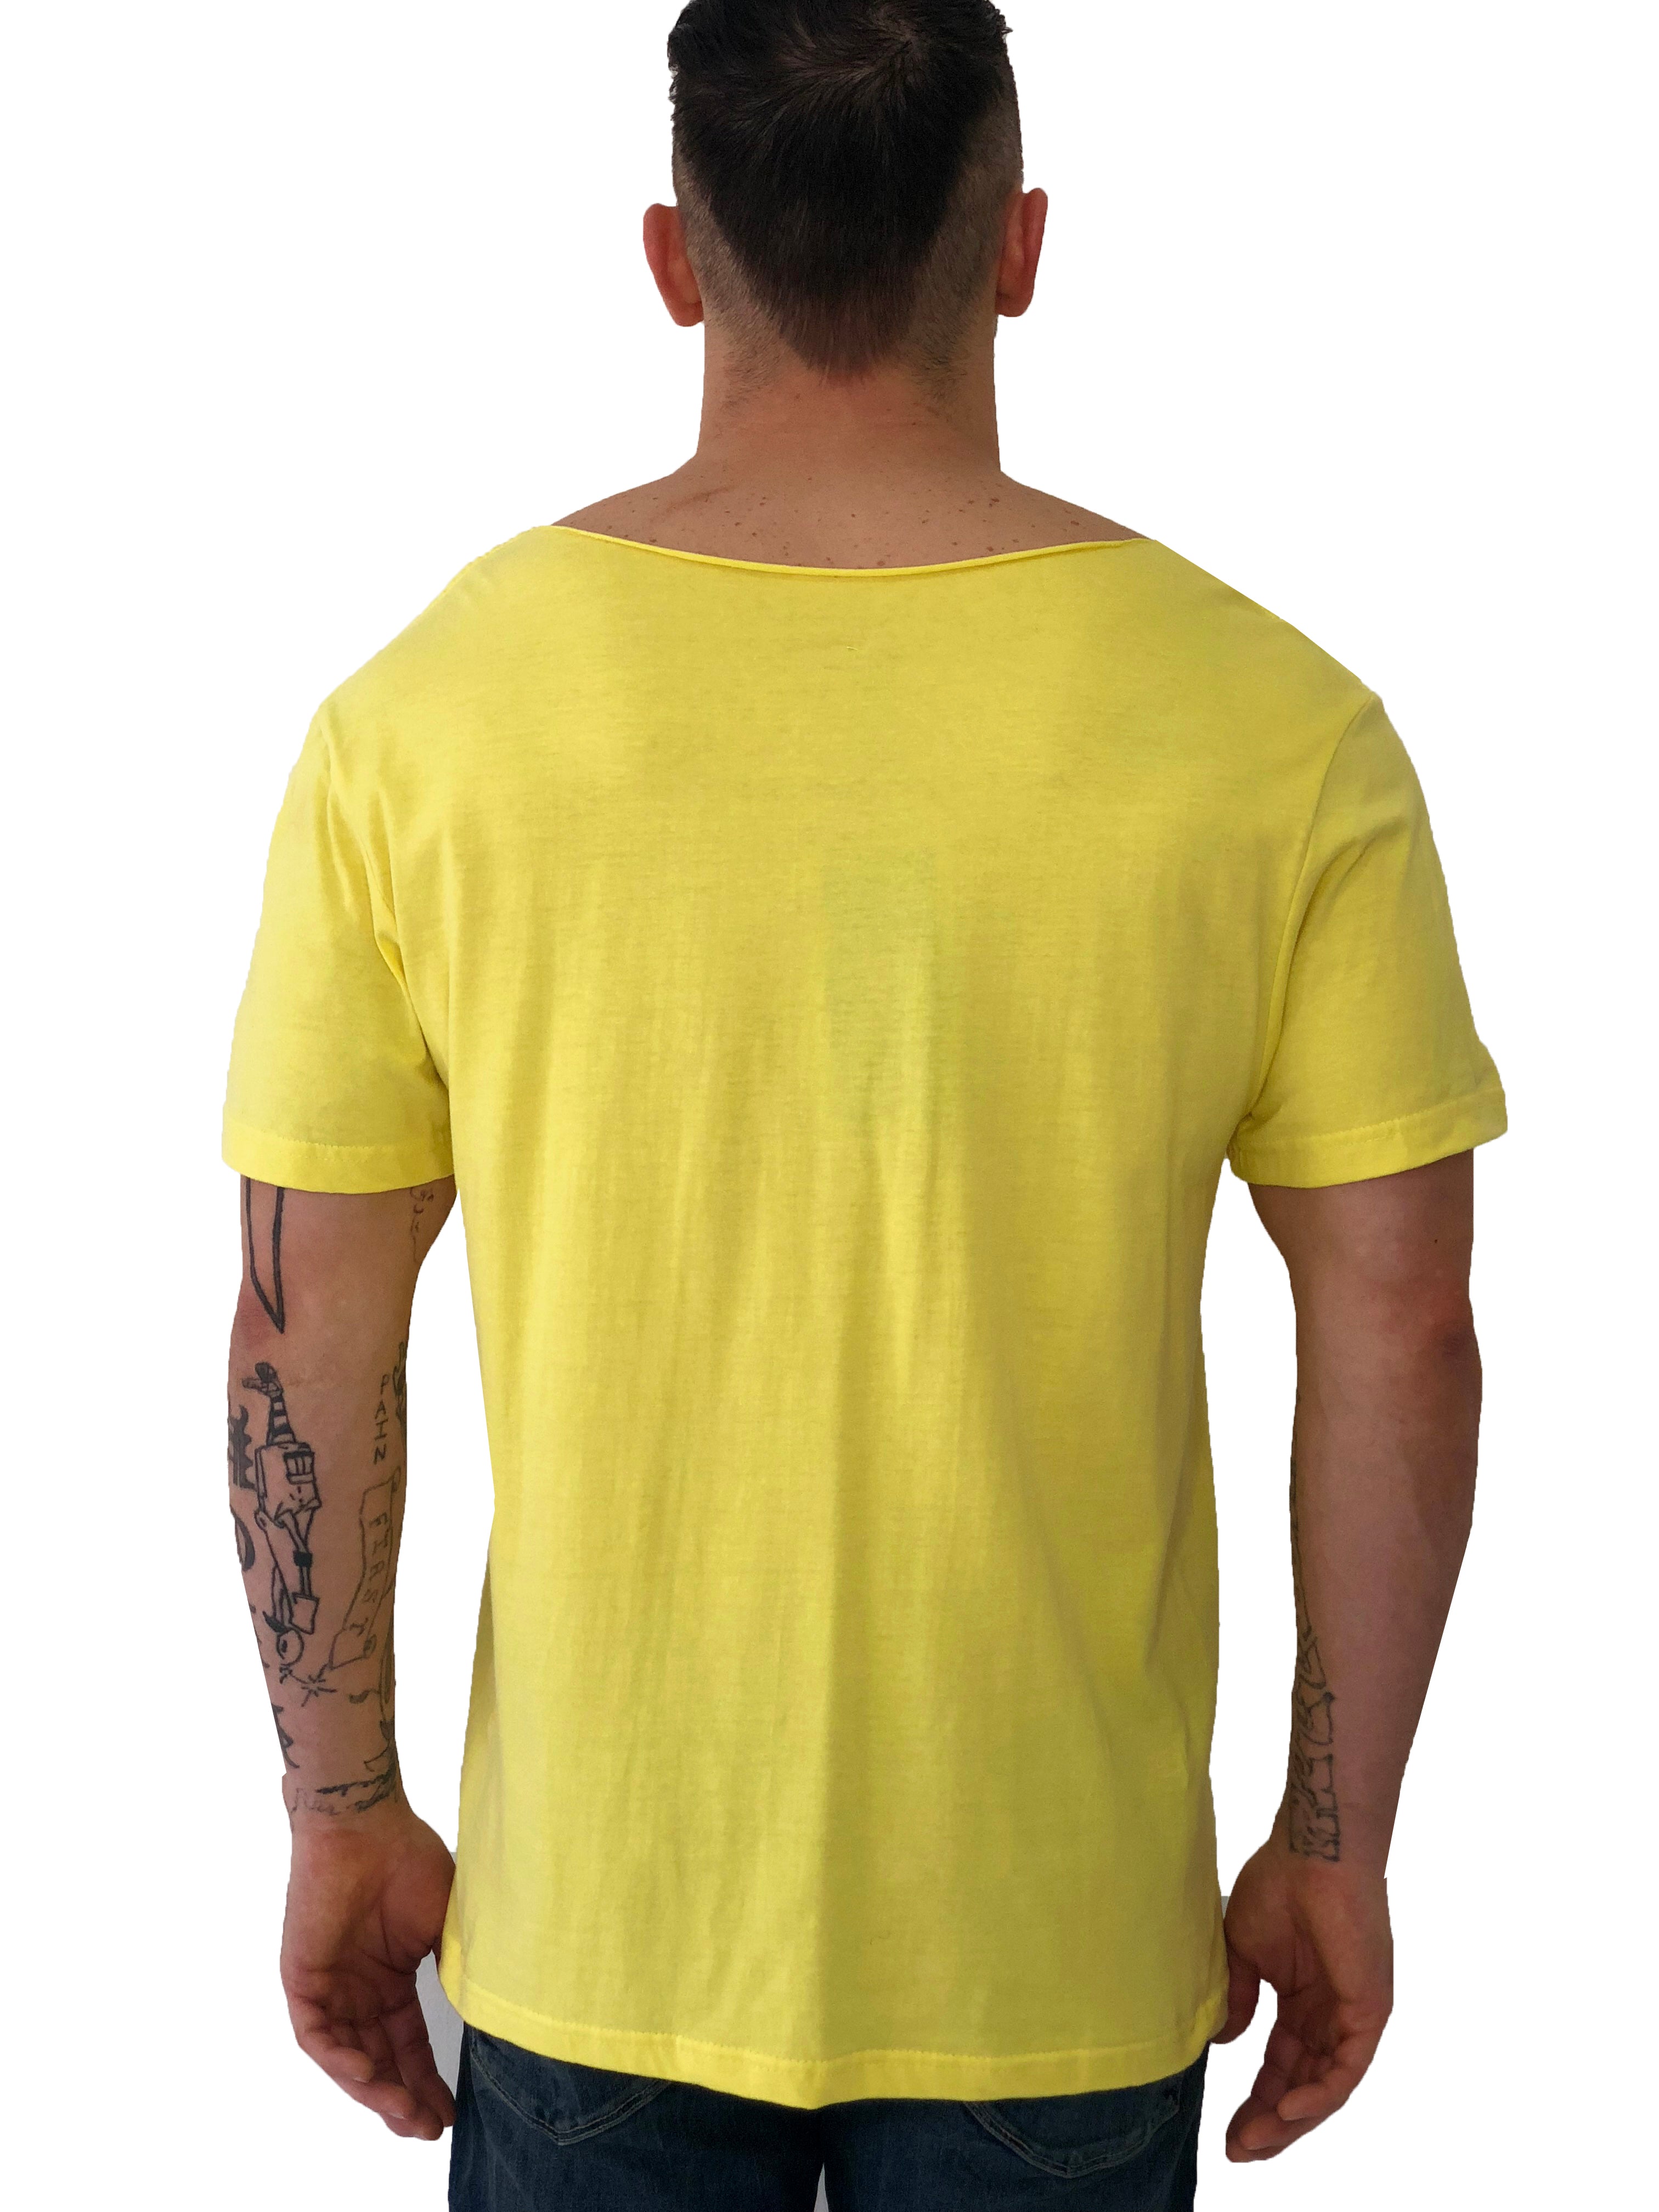 Men T-Shirt "La Demence" Face Yellow by iacobuccyounes Italy - Brit Boss 